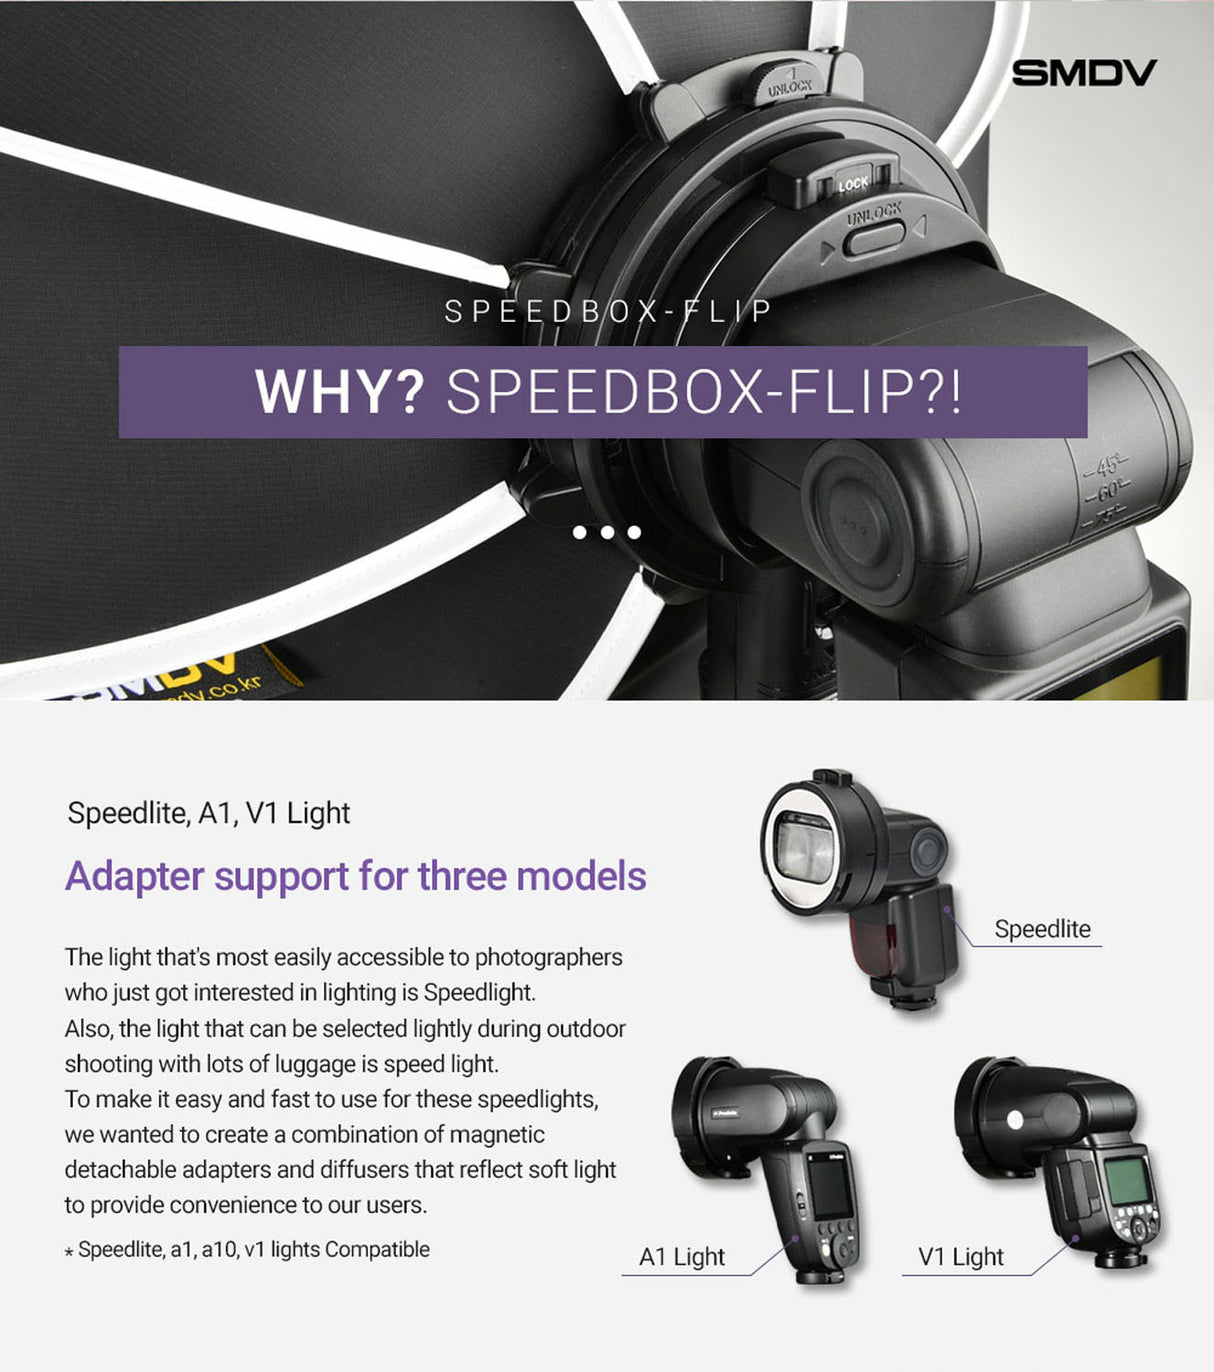 FLIP28G Speedbox from SMDV